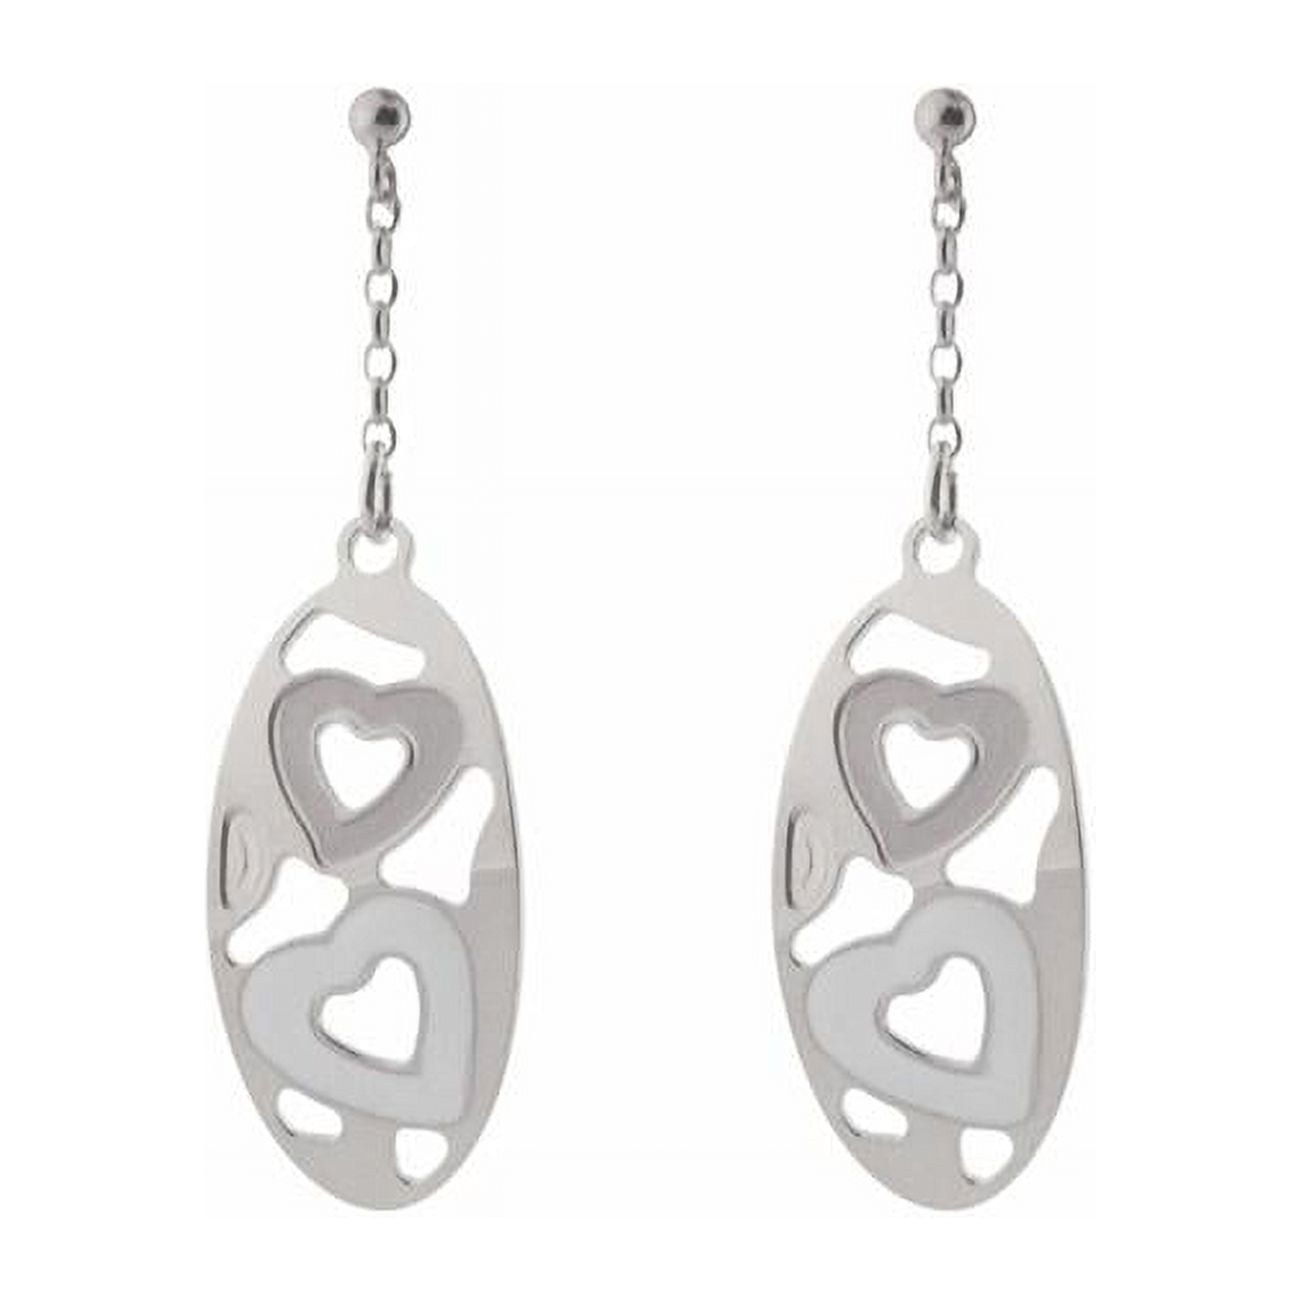 95127p Rose Vermeil & White Enamel Satin Finish Hearts Sterling Silver Earrings